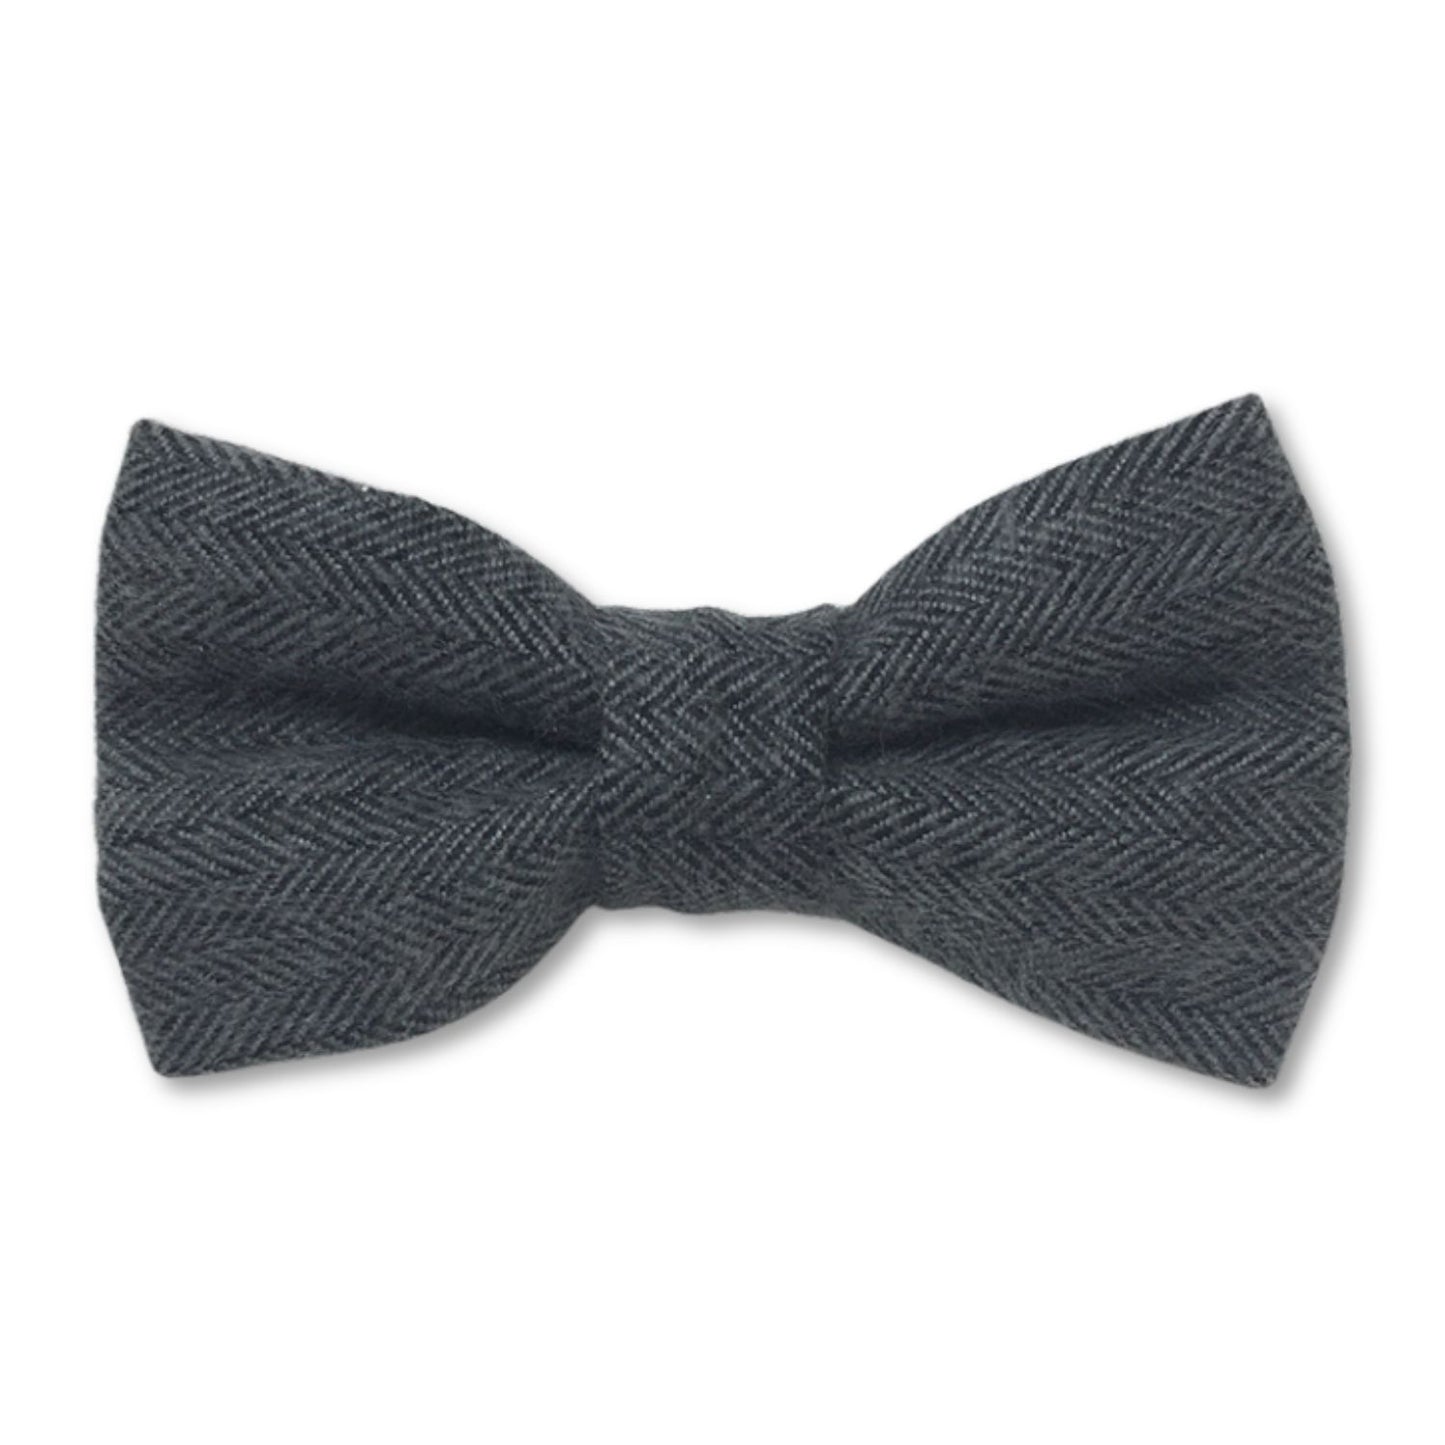 Charcoal Gray Flannel Herringbone Dog Bow Tie